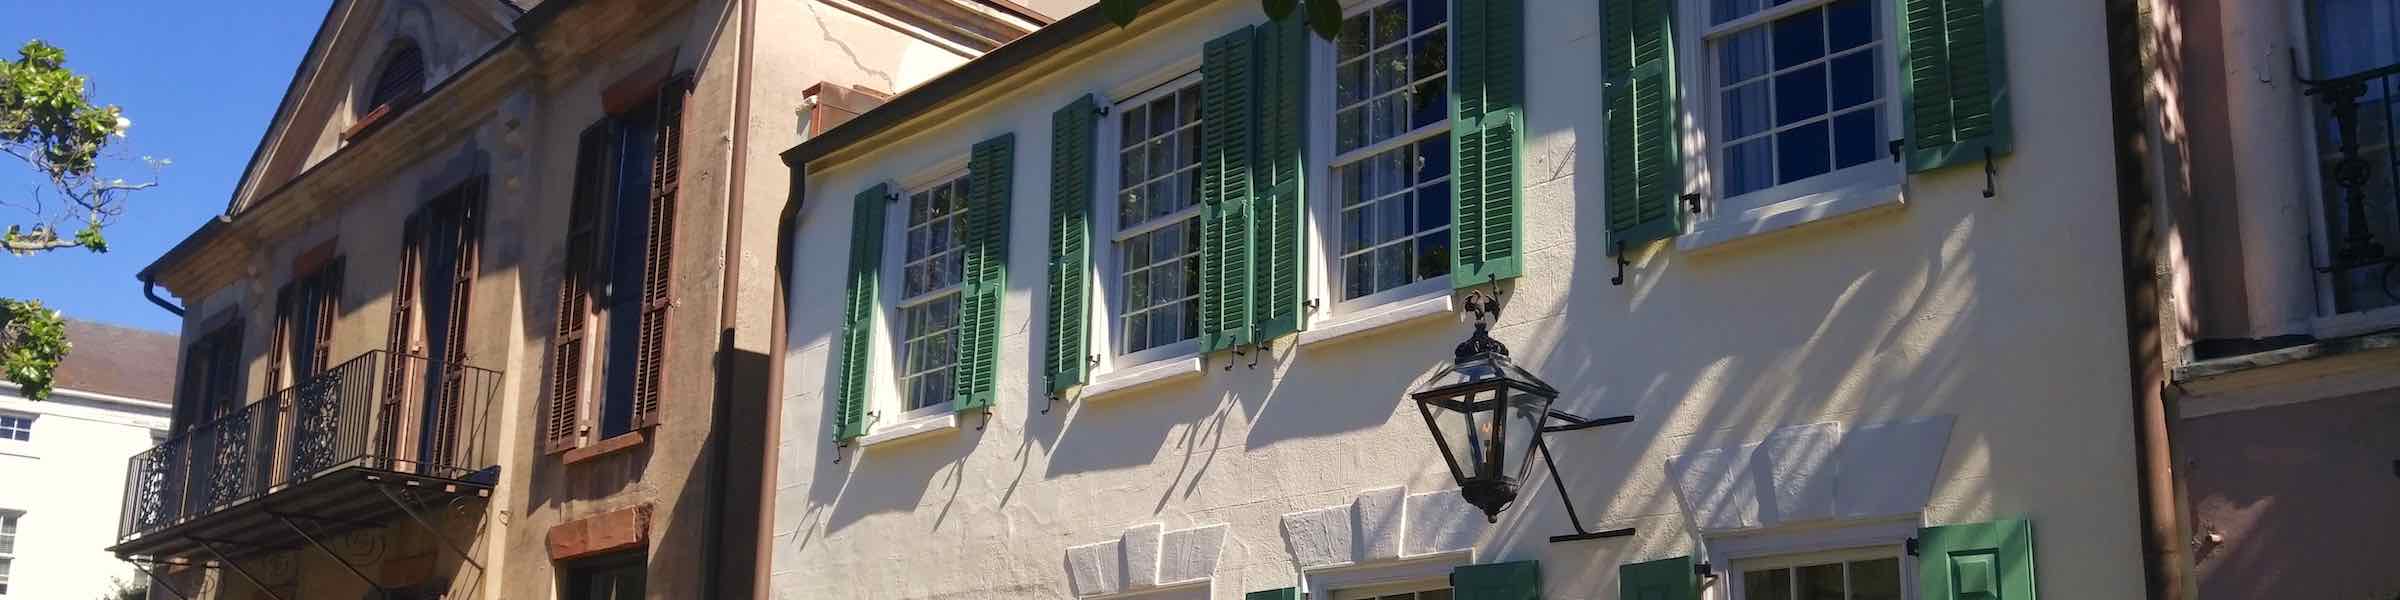 Street scene of historic homes in Charleston's South of Broad neighborhood.